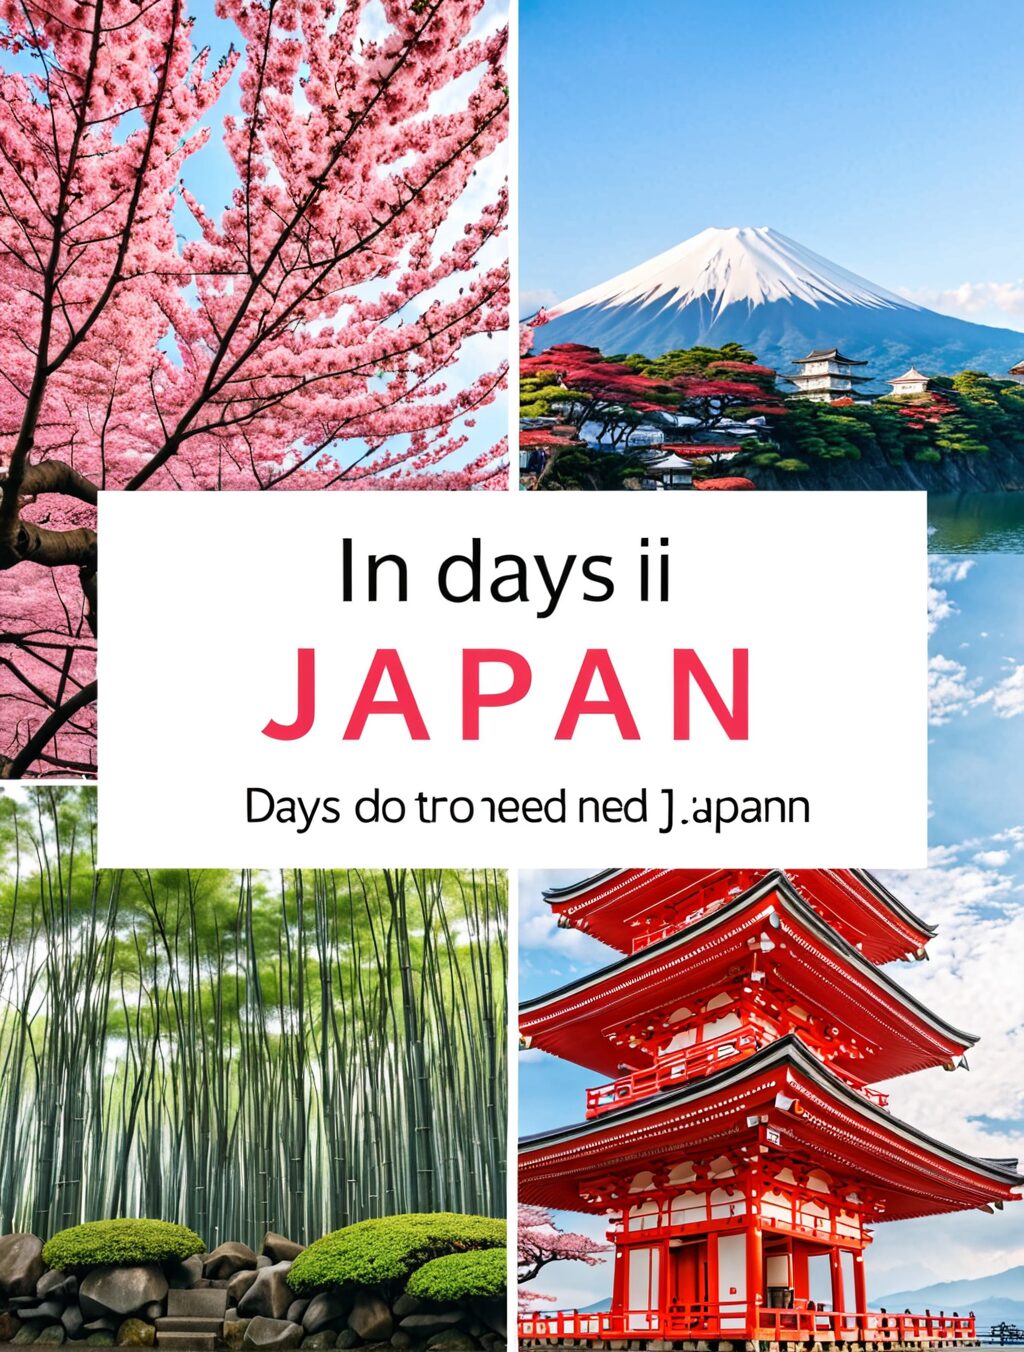 how many days do i need to visit japan